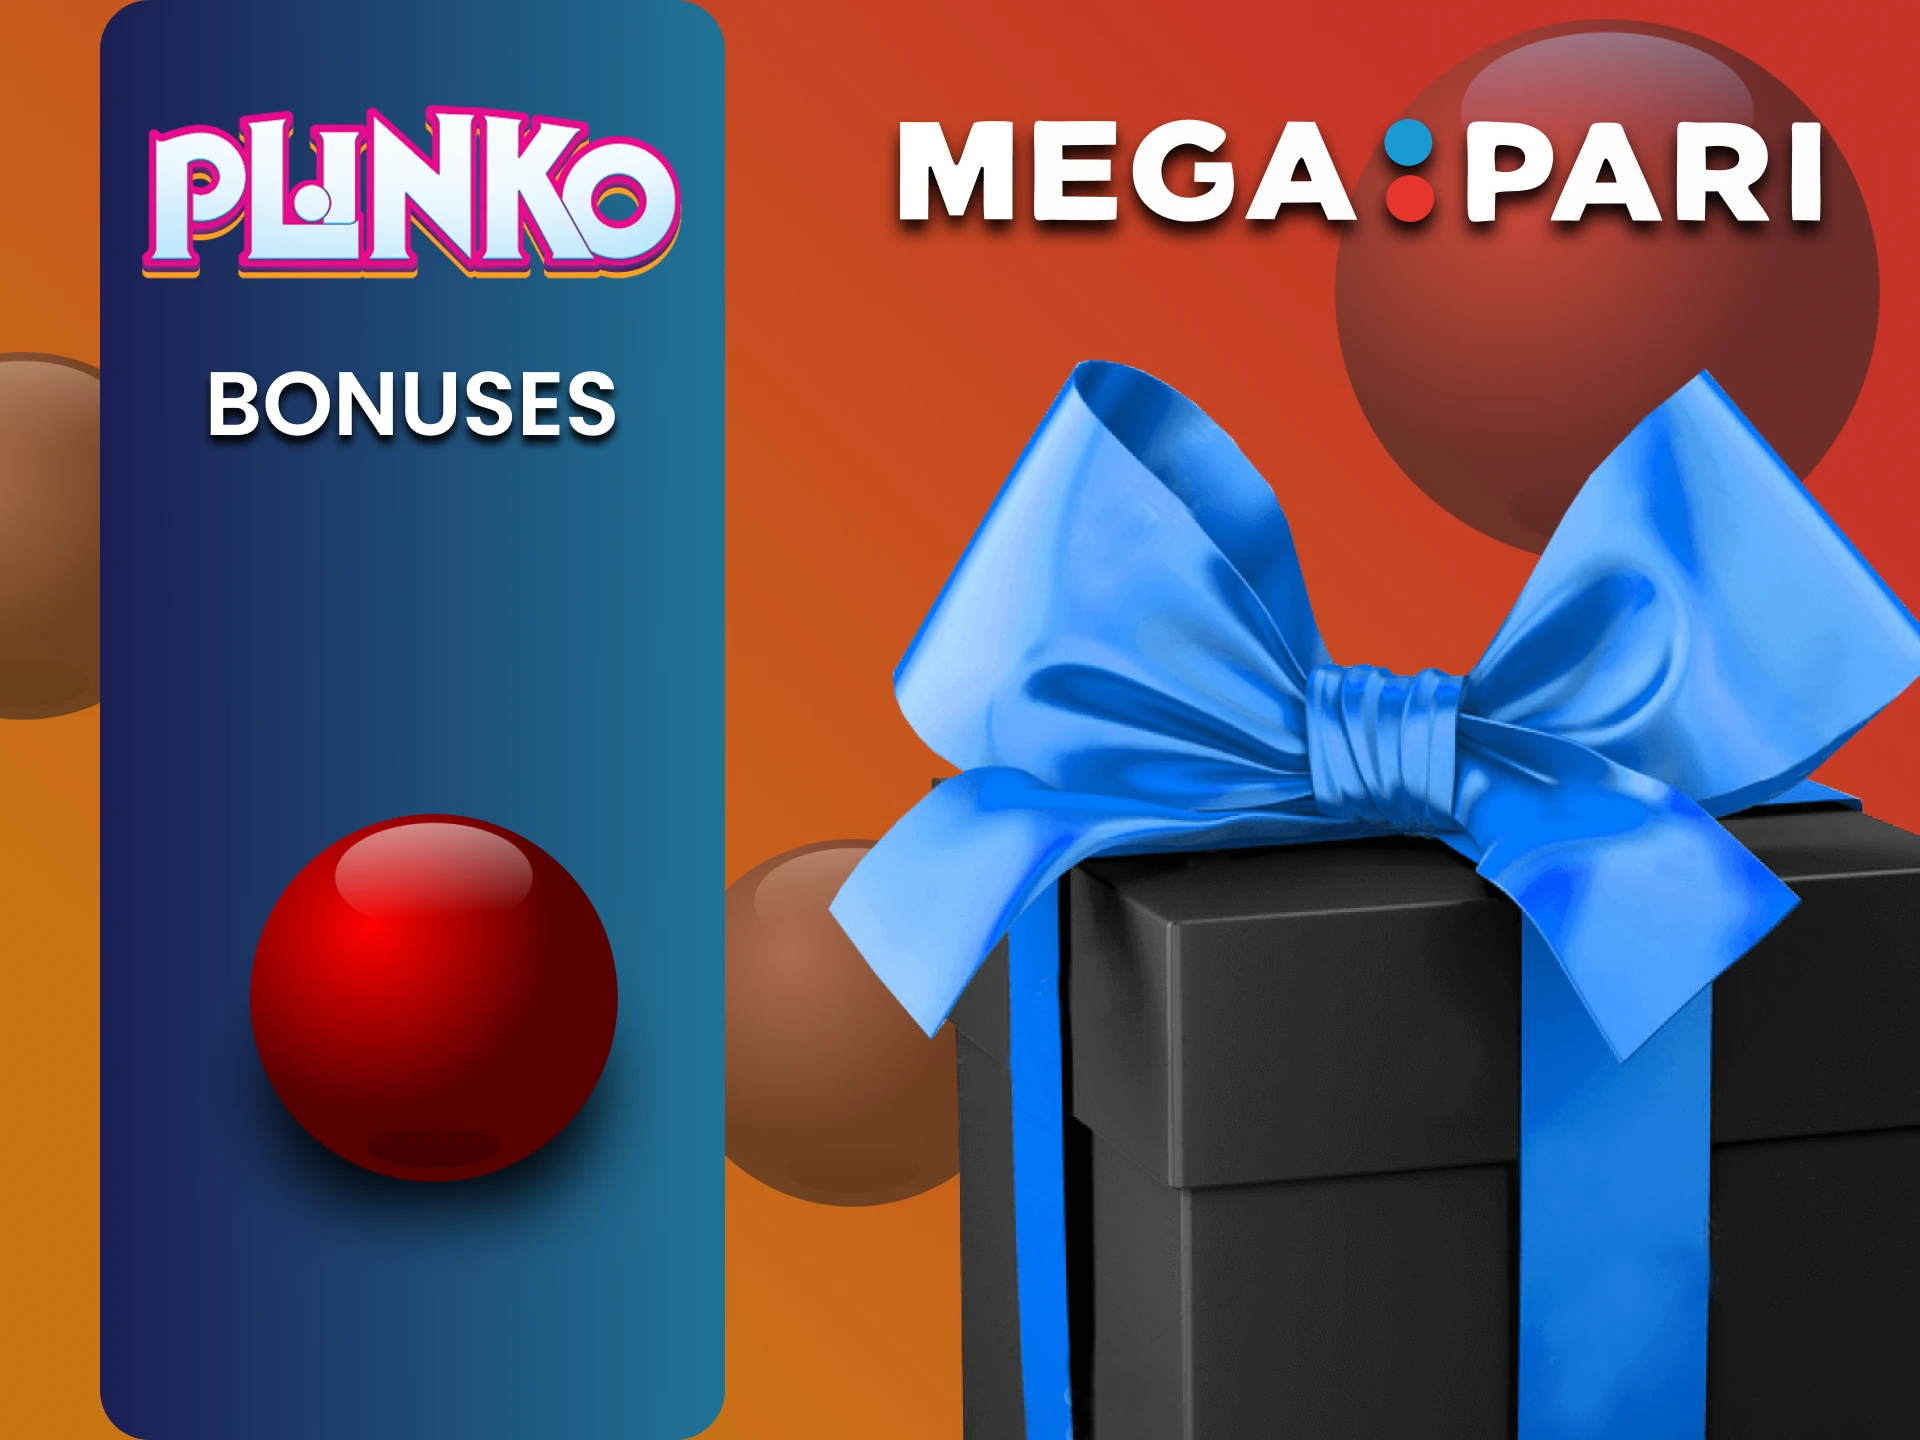 Megapari gives bonuses for playing Plinko.